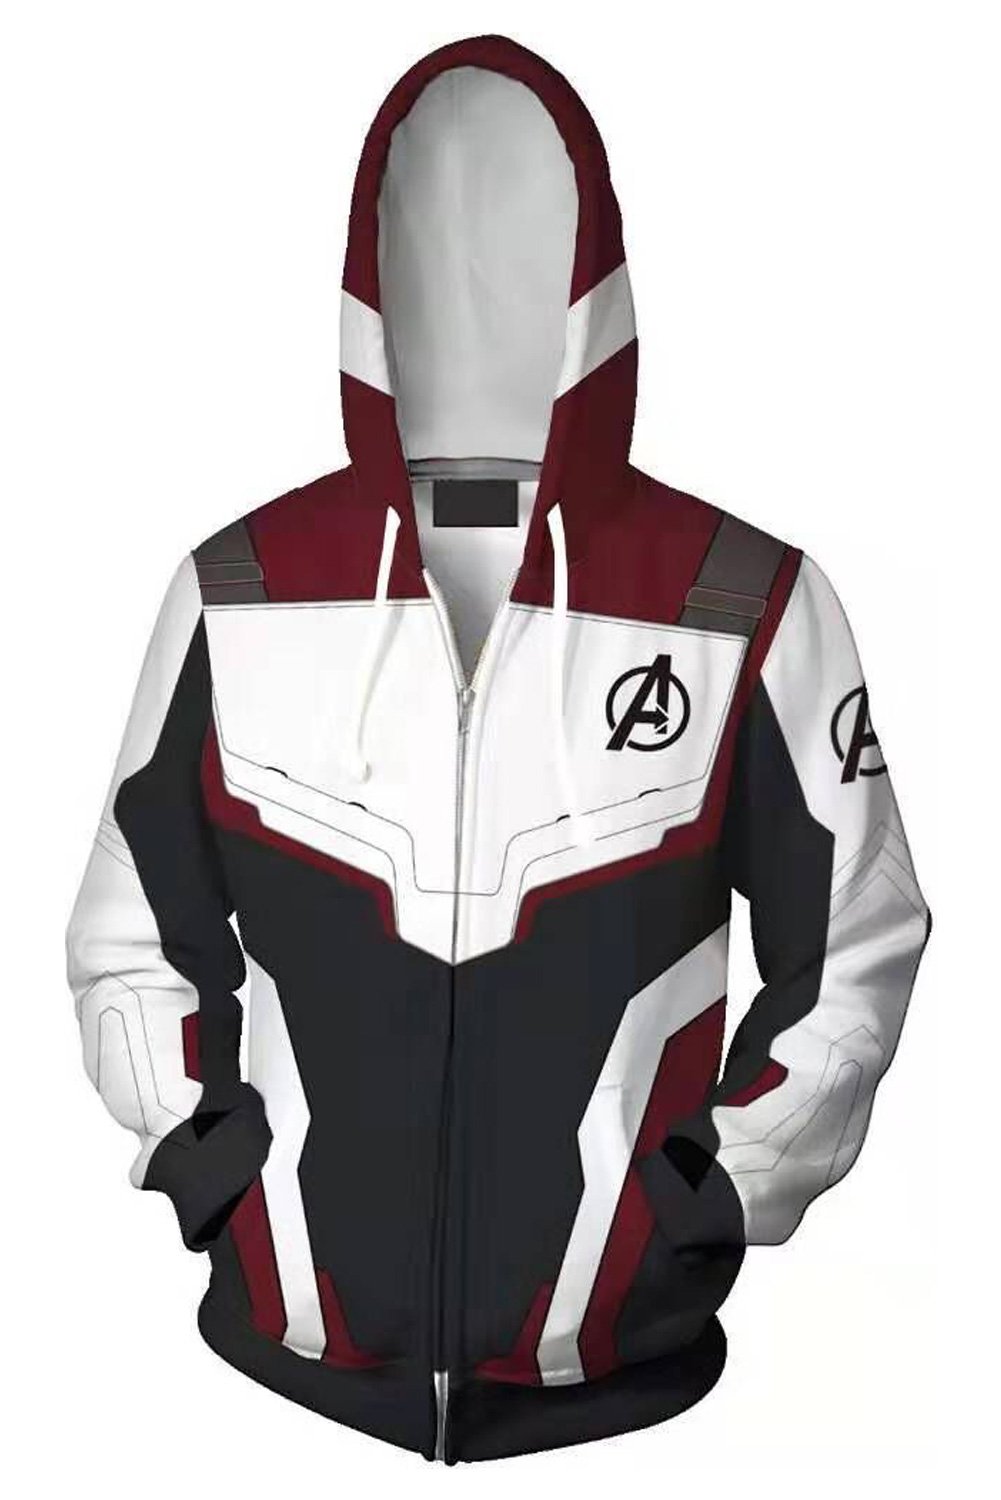 Buy Marvel Boys' Avengers Endgame Costume Hoodie, White S(6/7) at Amazon.in